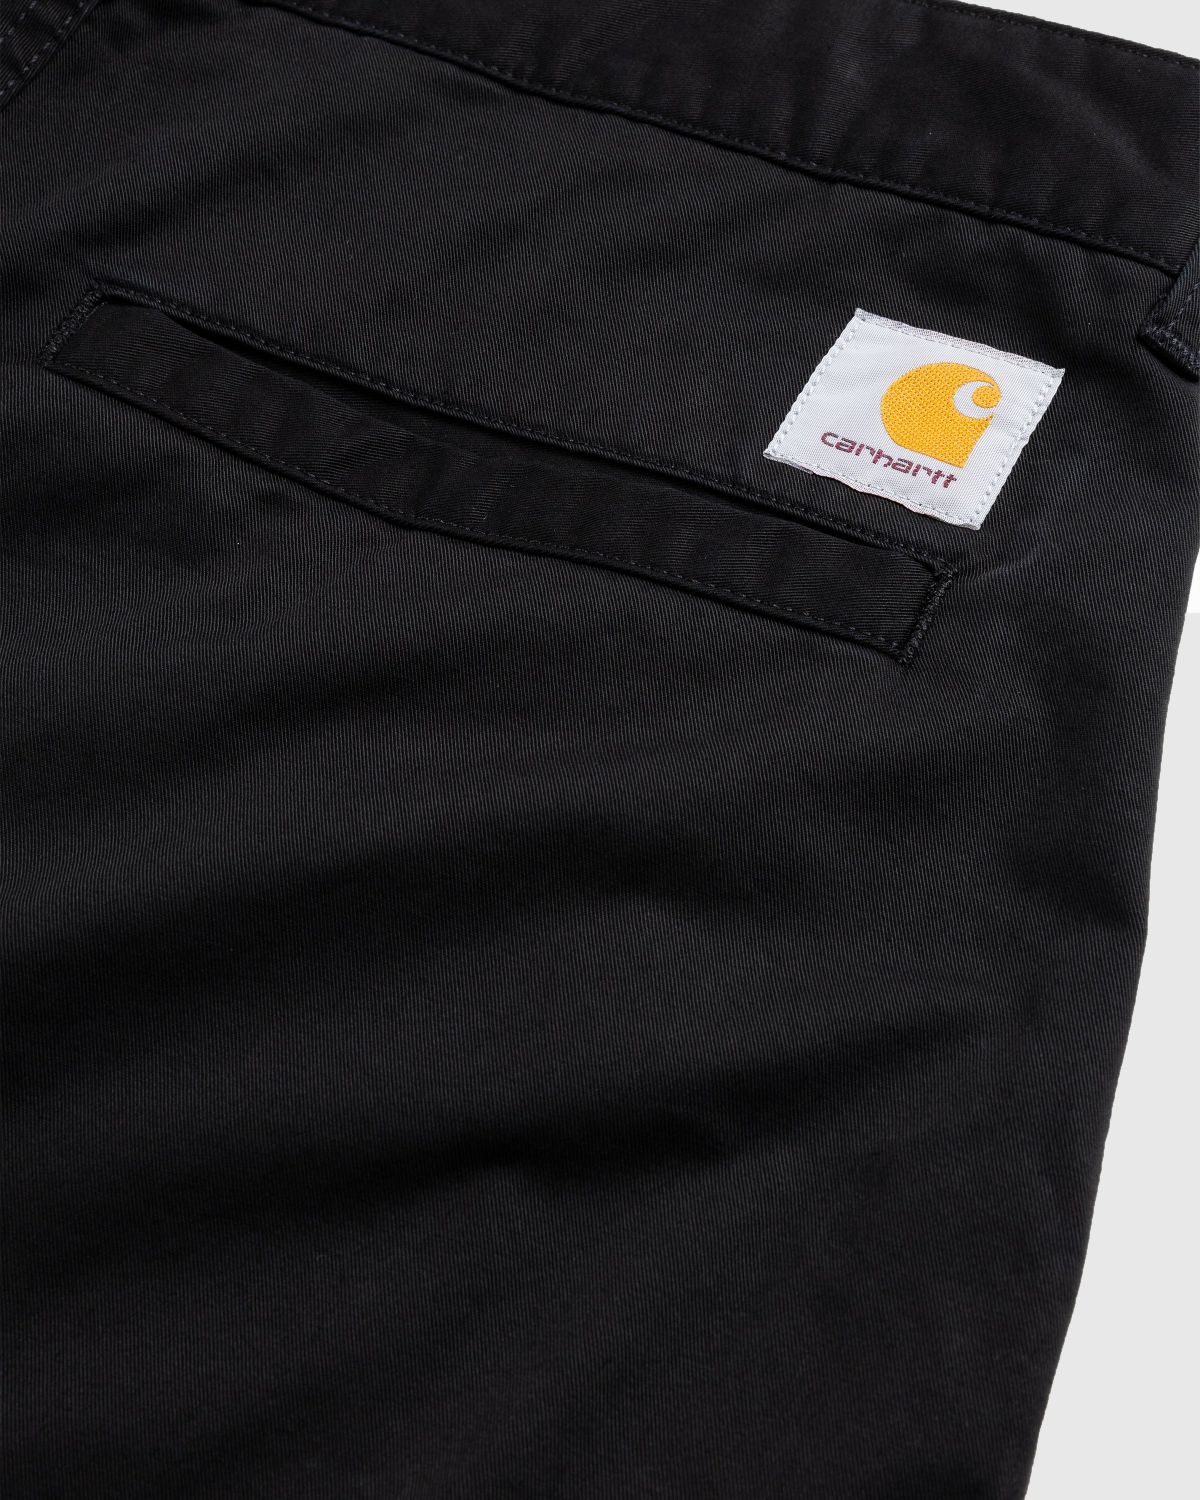 Carhartt WIP – Colston Pant Stonewashed Black - Pants - Black - Image 6